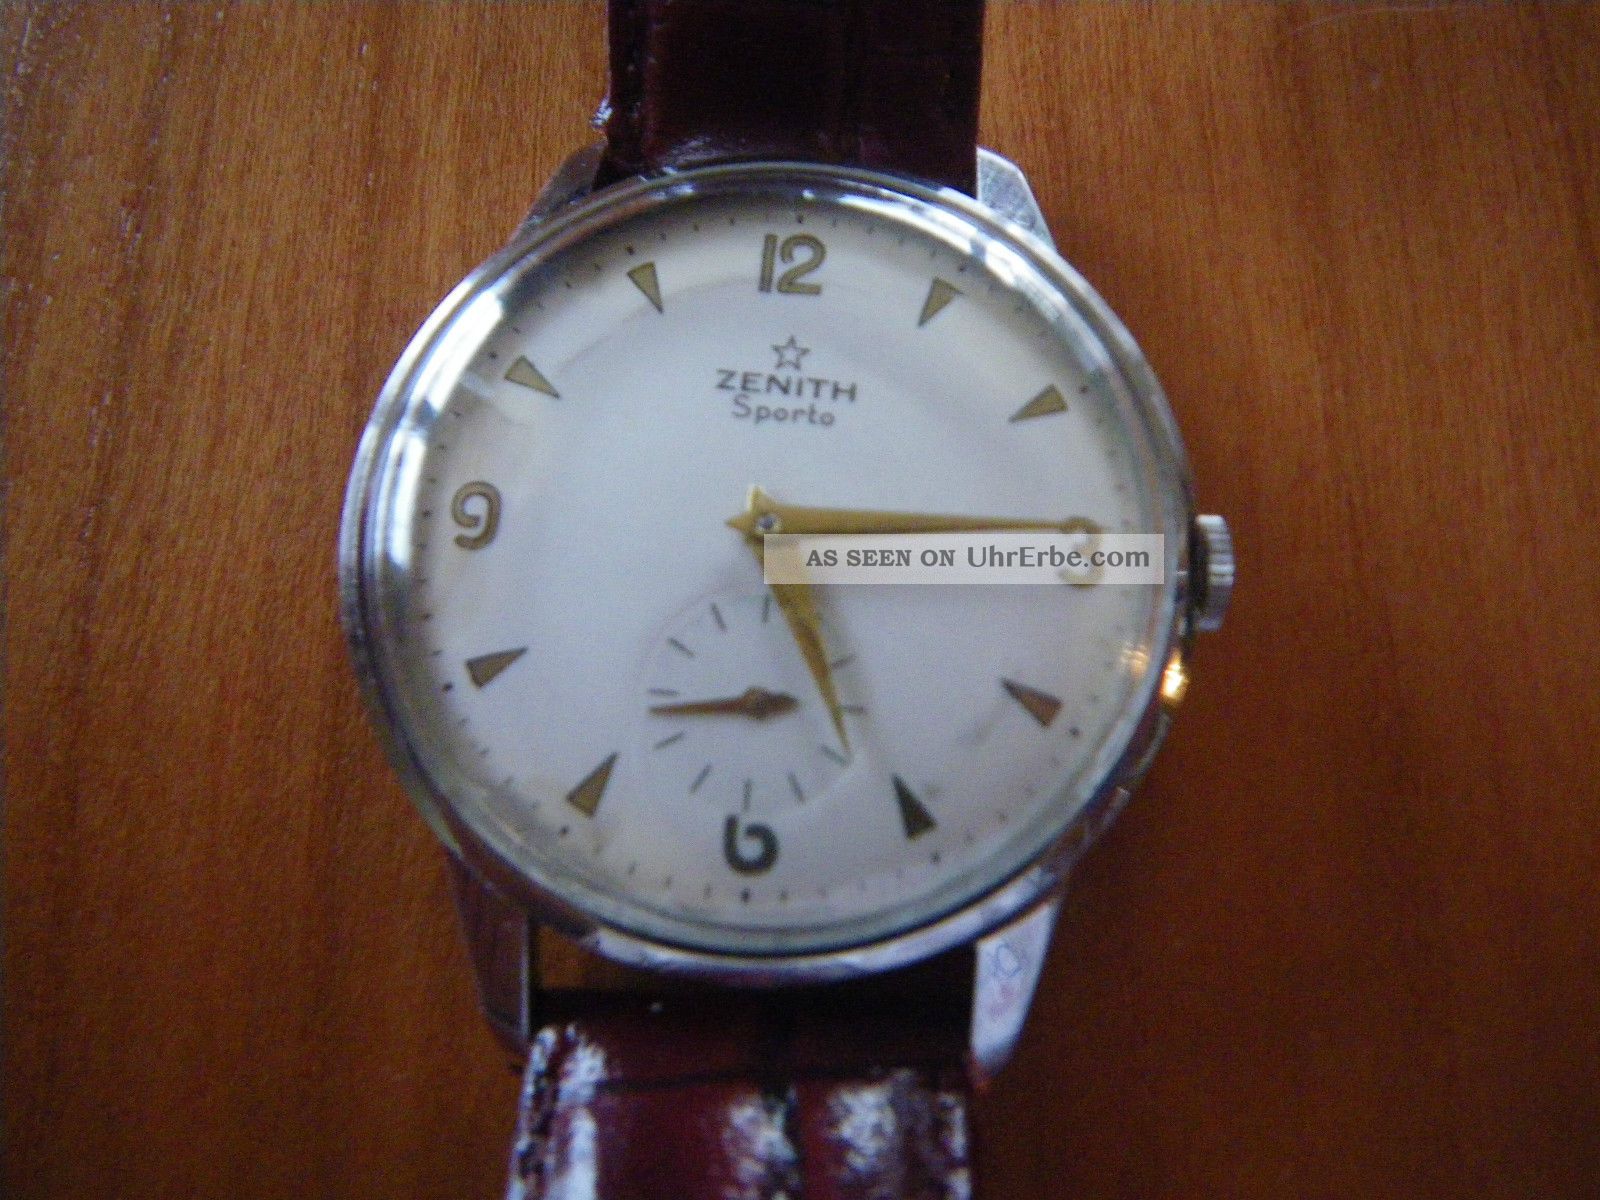 Verkaufe Schöne Zenith Sporto Handaufzugsuhr In Armbanduhren Bild